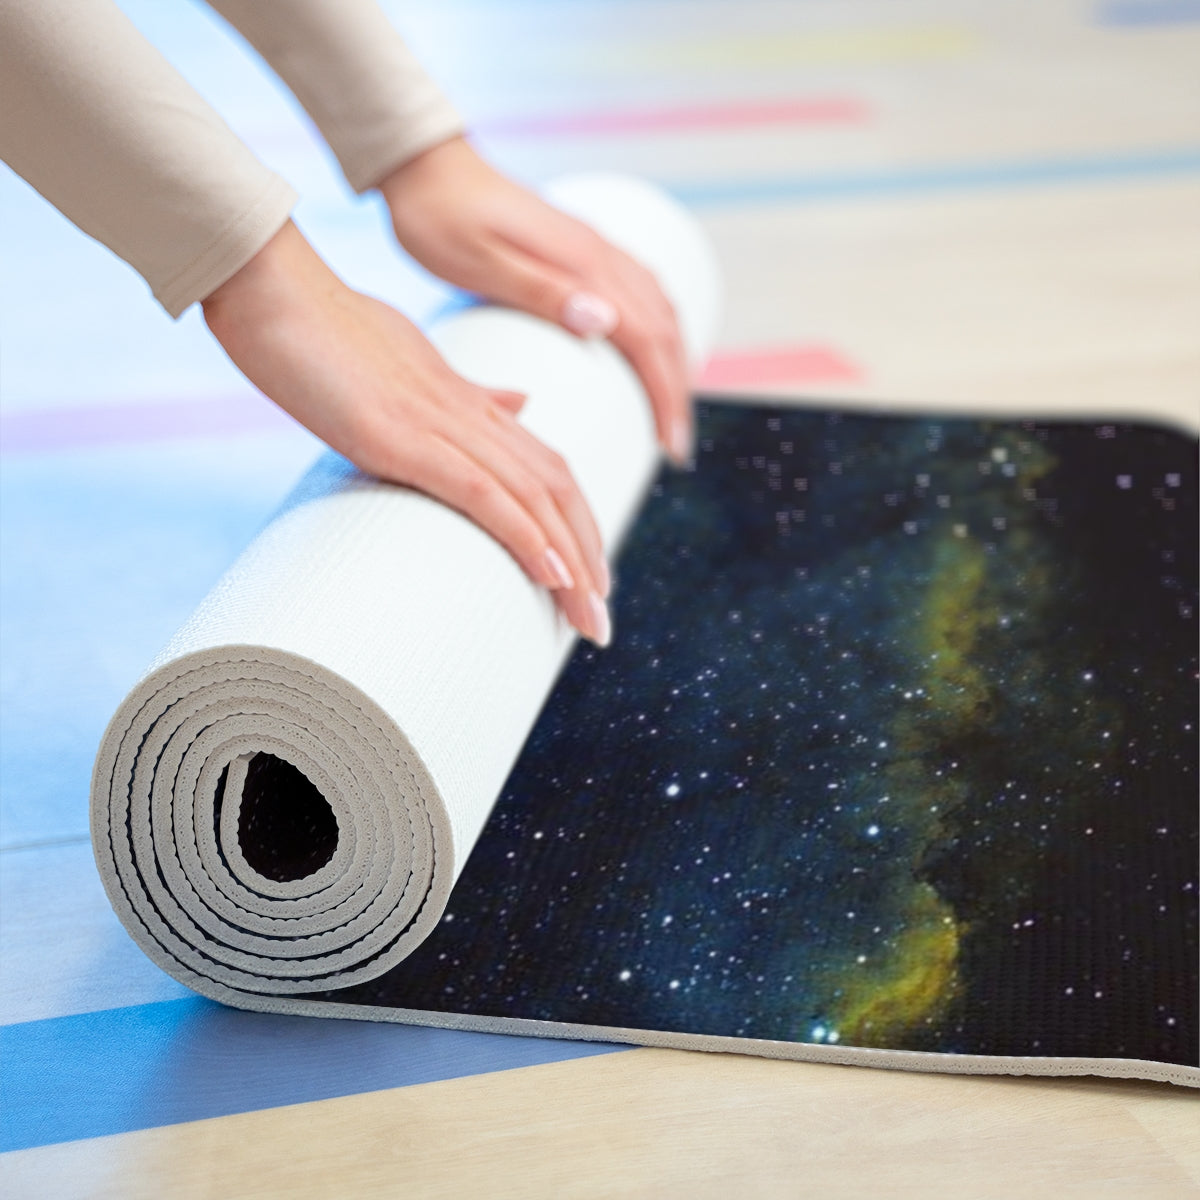 Foam Yoga Mat: Heart Nebula Hubble Palette